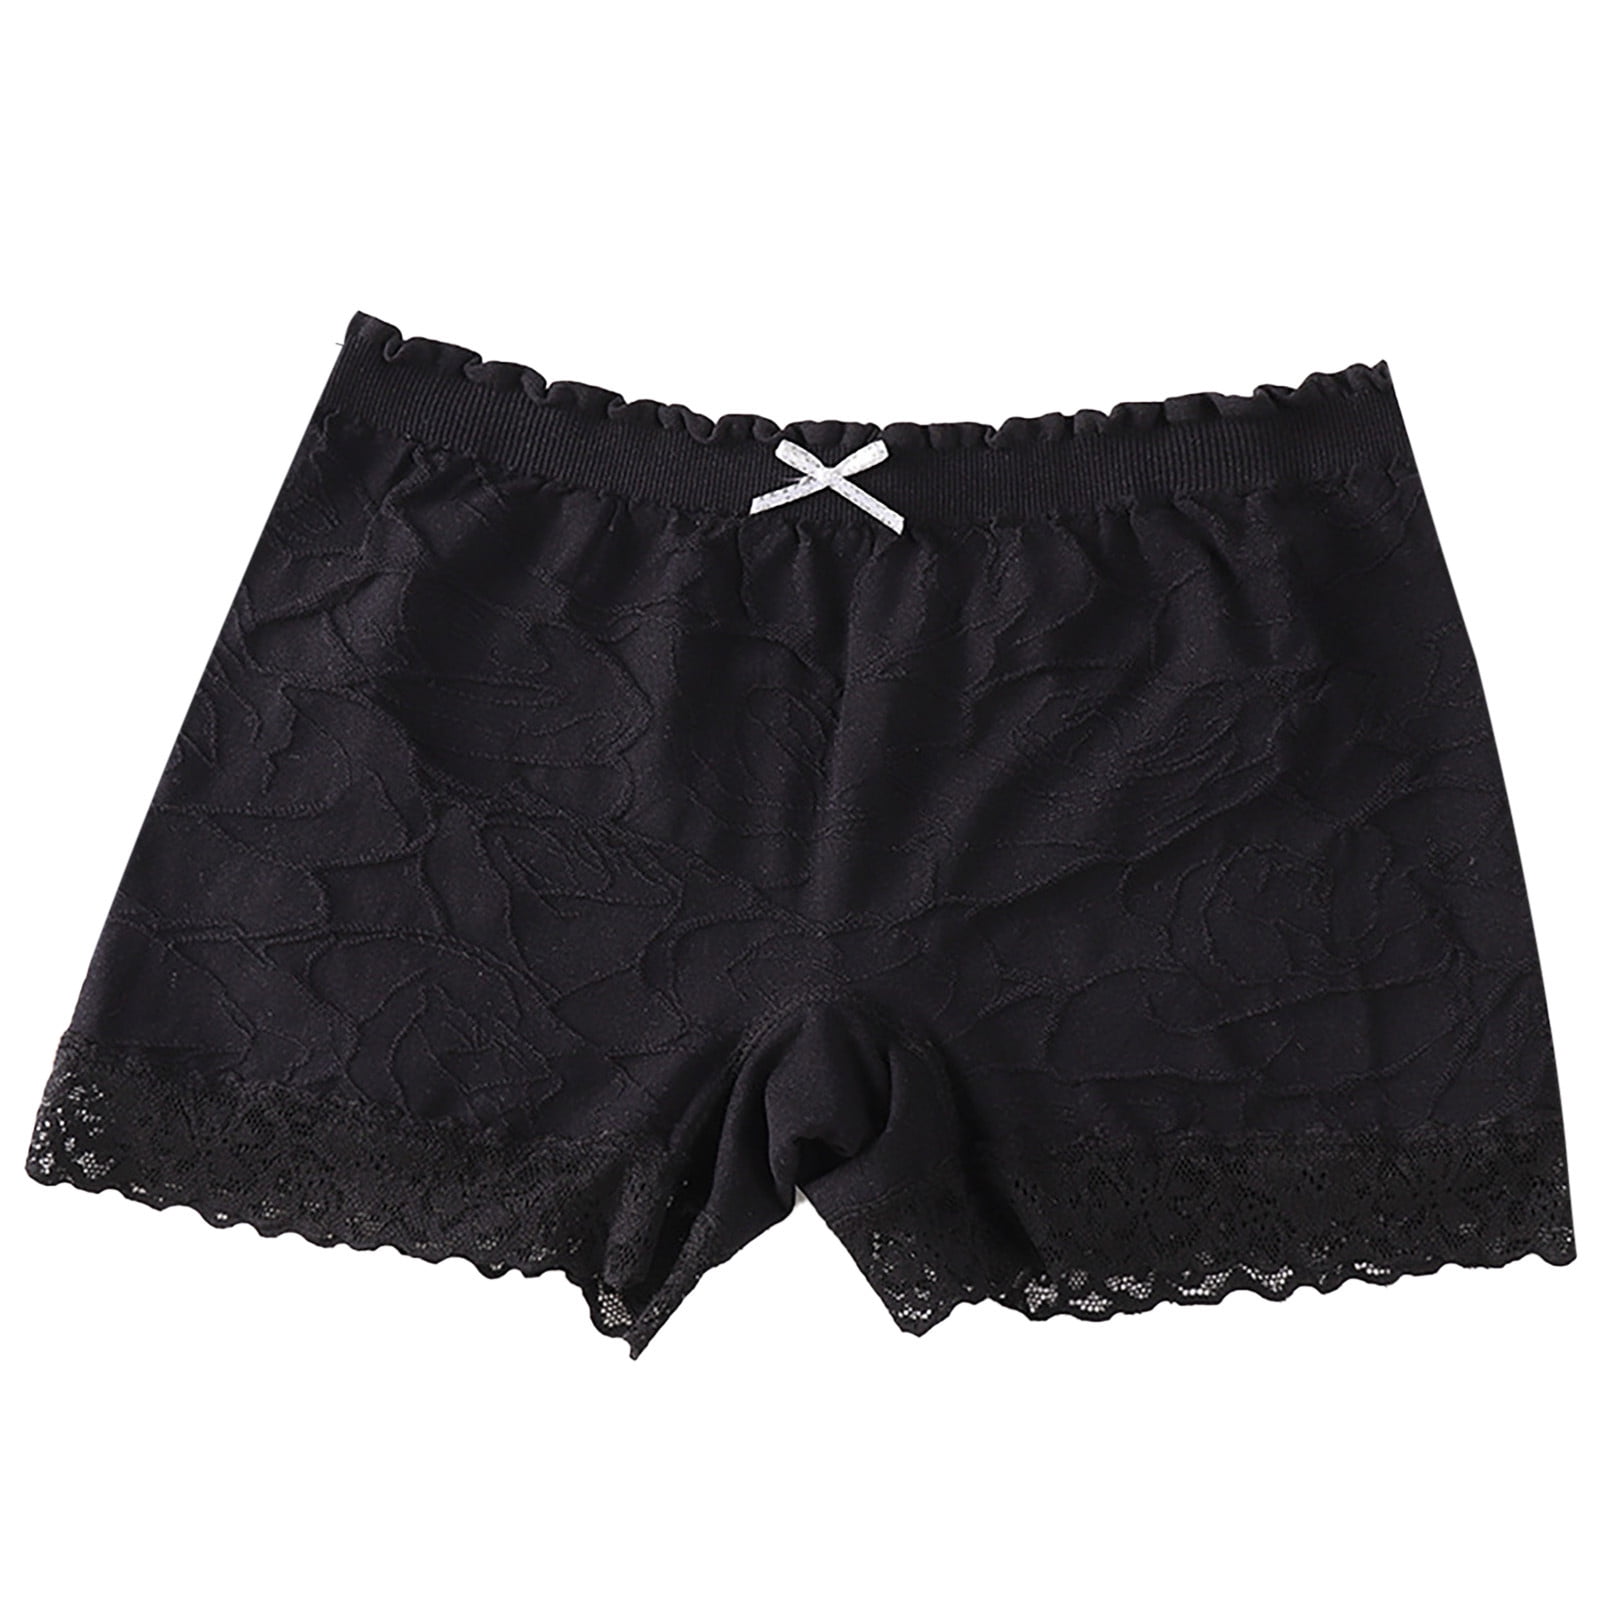 EHTMSAK Women's Boyshort Panties Lace High Waisted Soft Boxer Briefs ...